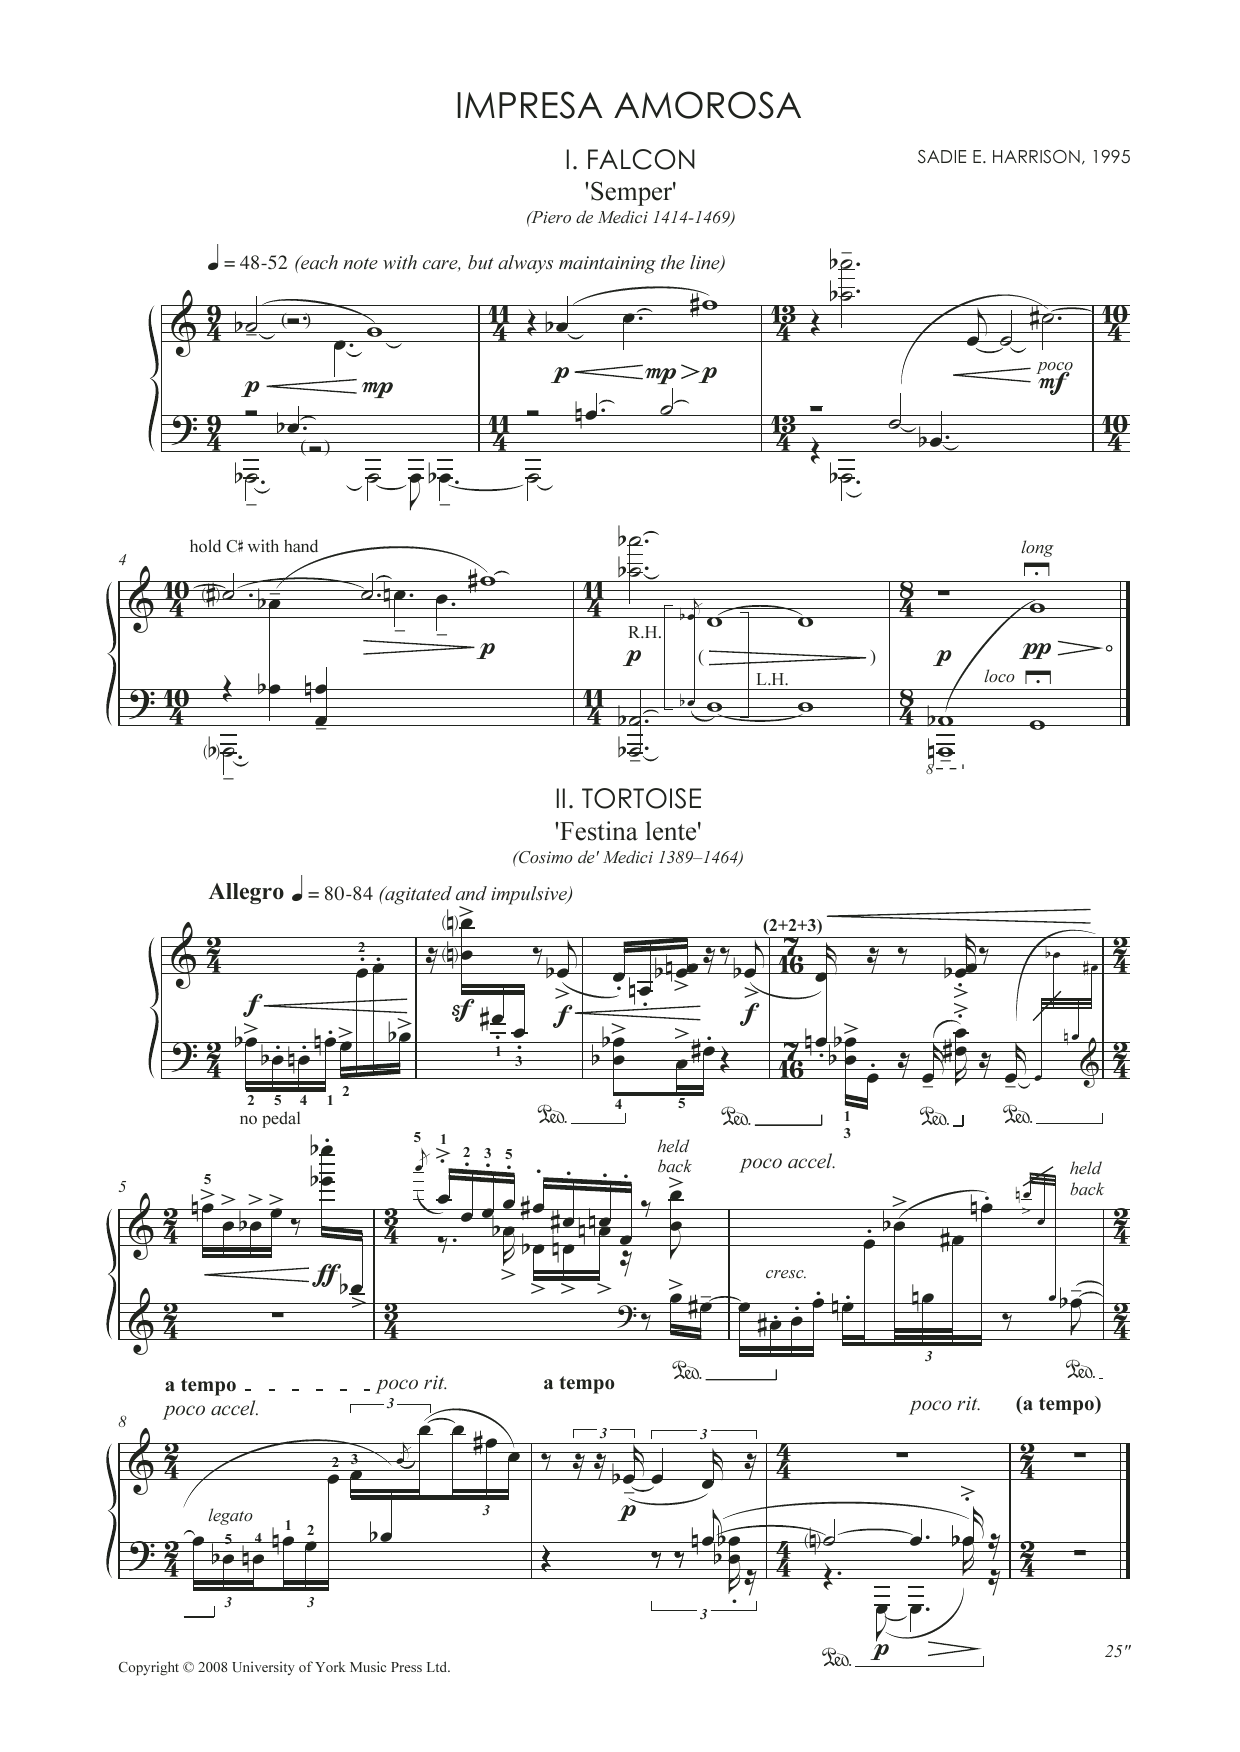 Sadie Harrison Impresa Amorosa Sheet Music Notes & Chords for Piano - Download or Print PDF